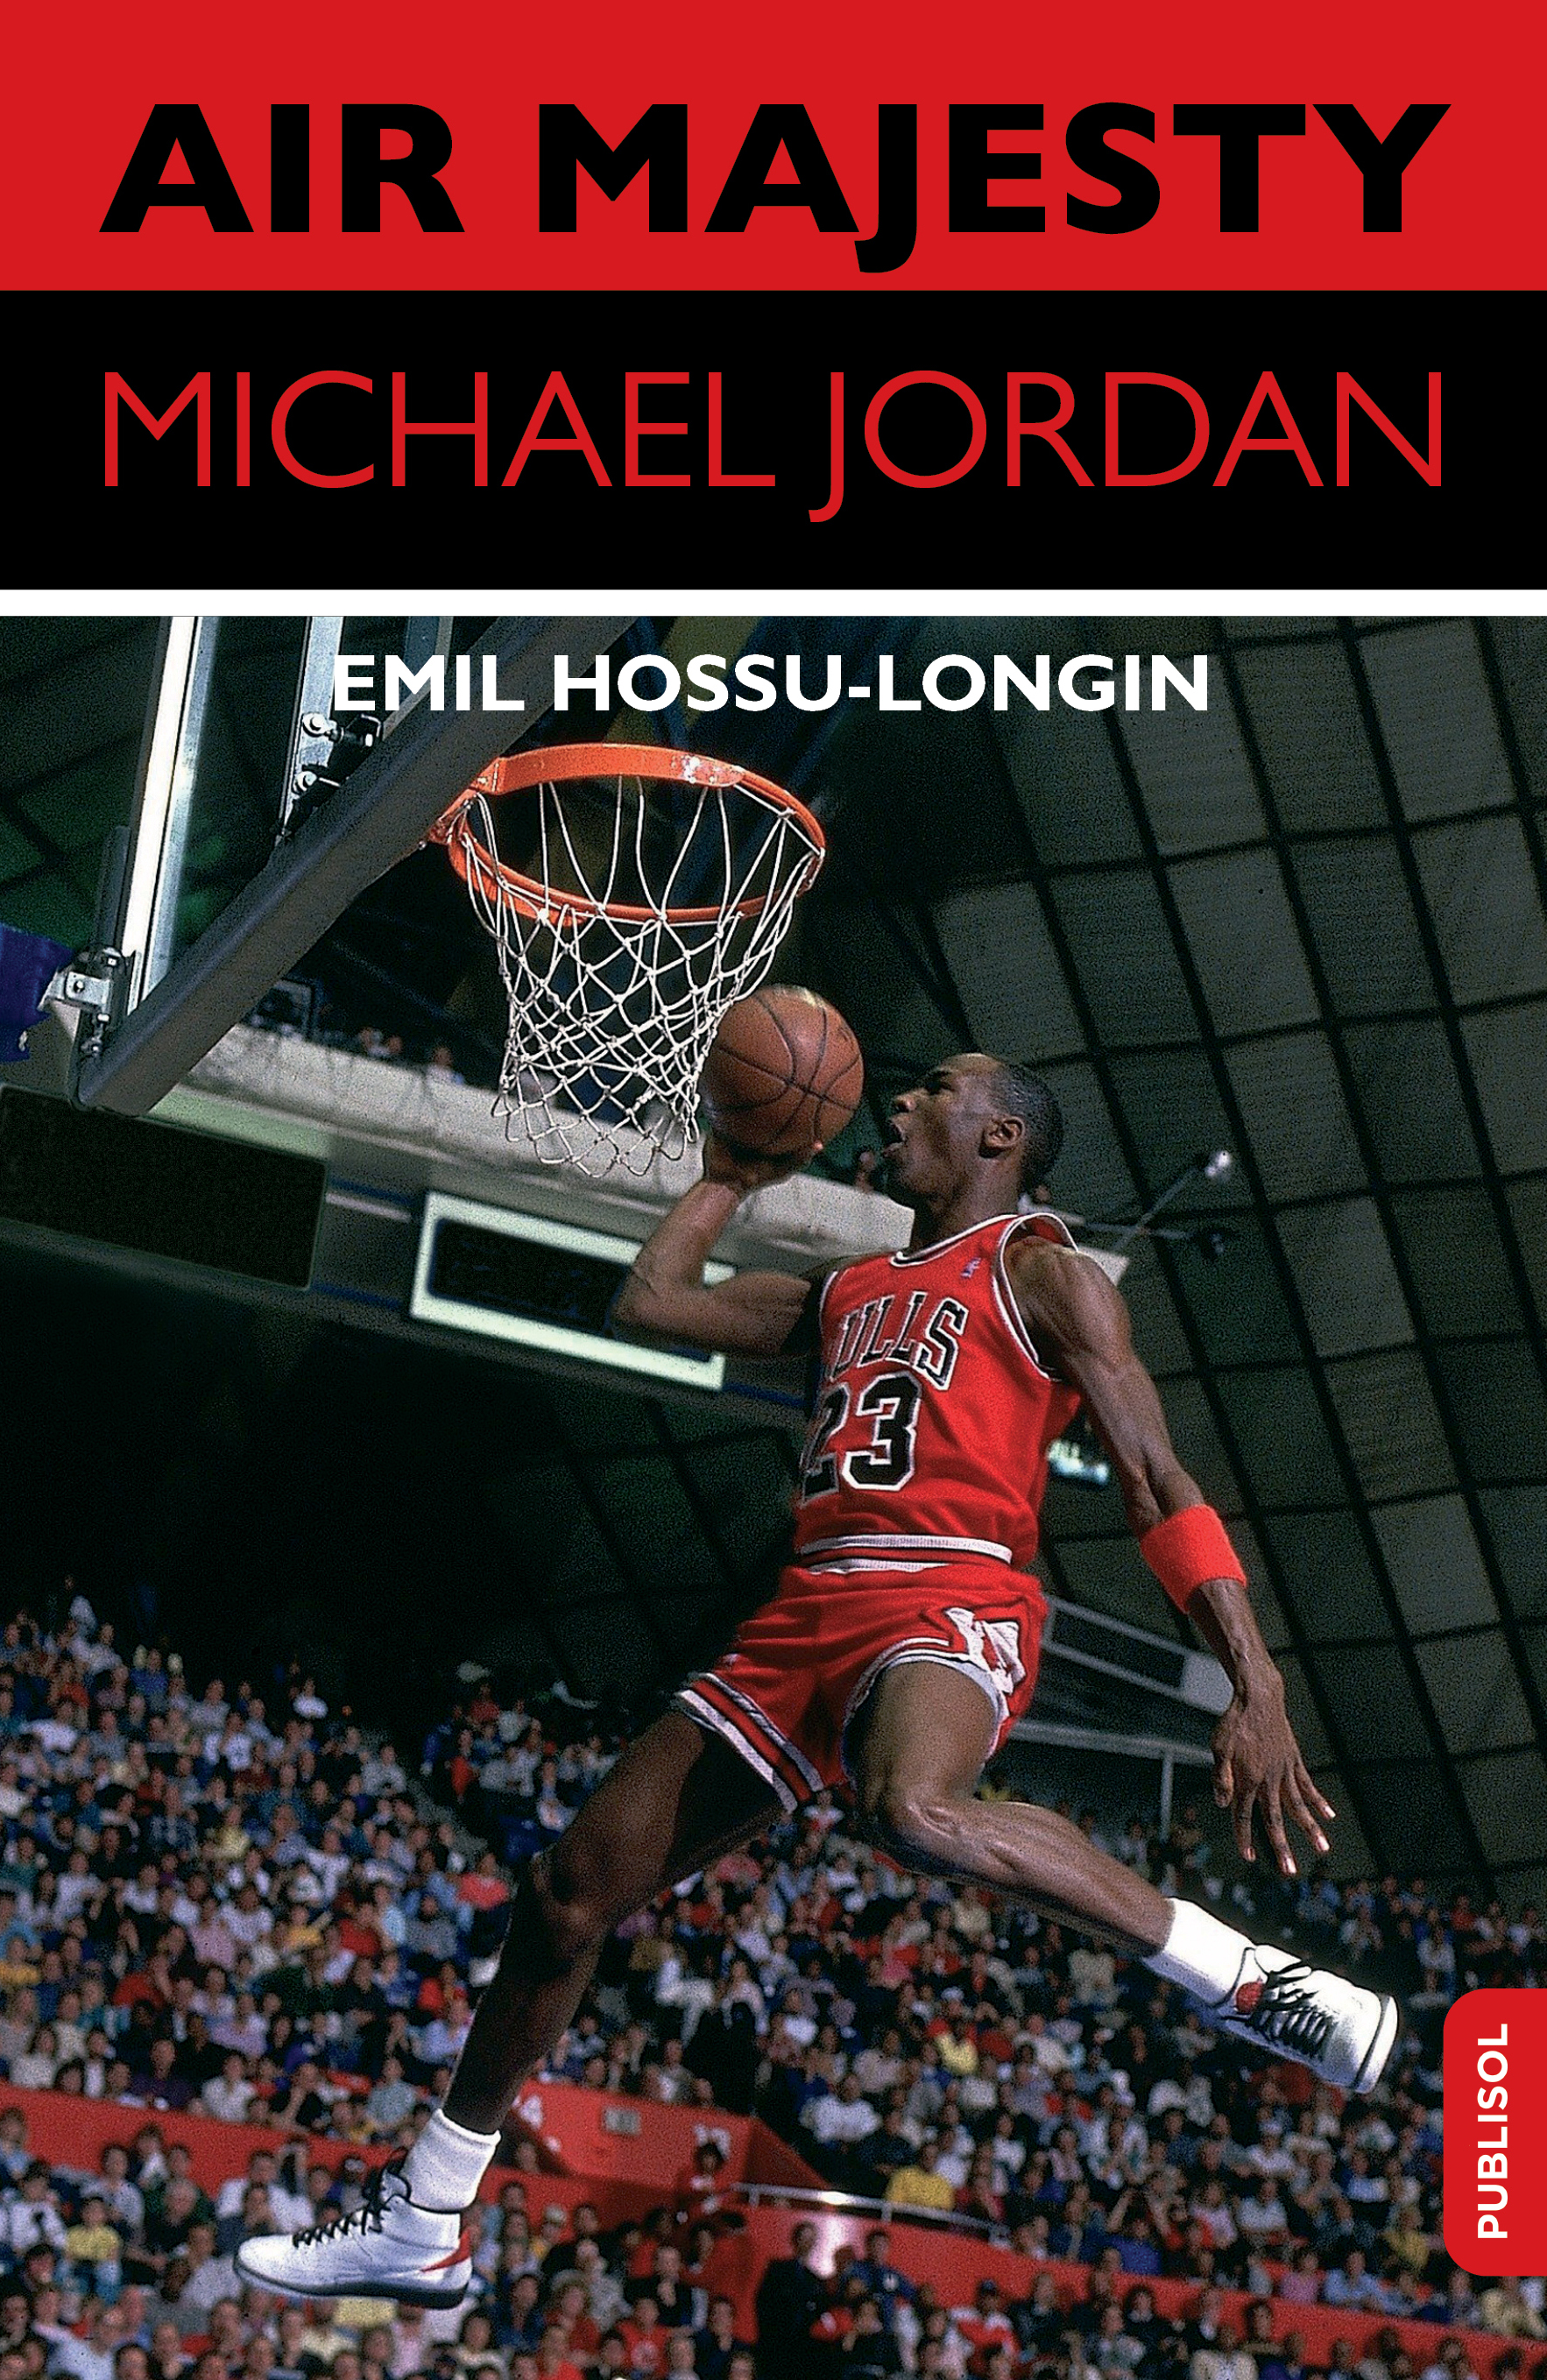 Air Majesty. Michael Jordan | Emil Hossu-Longin